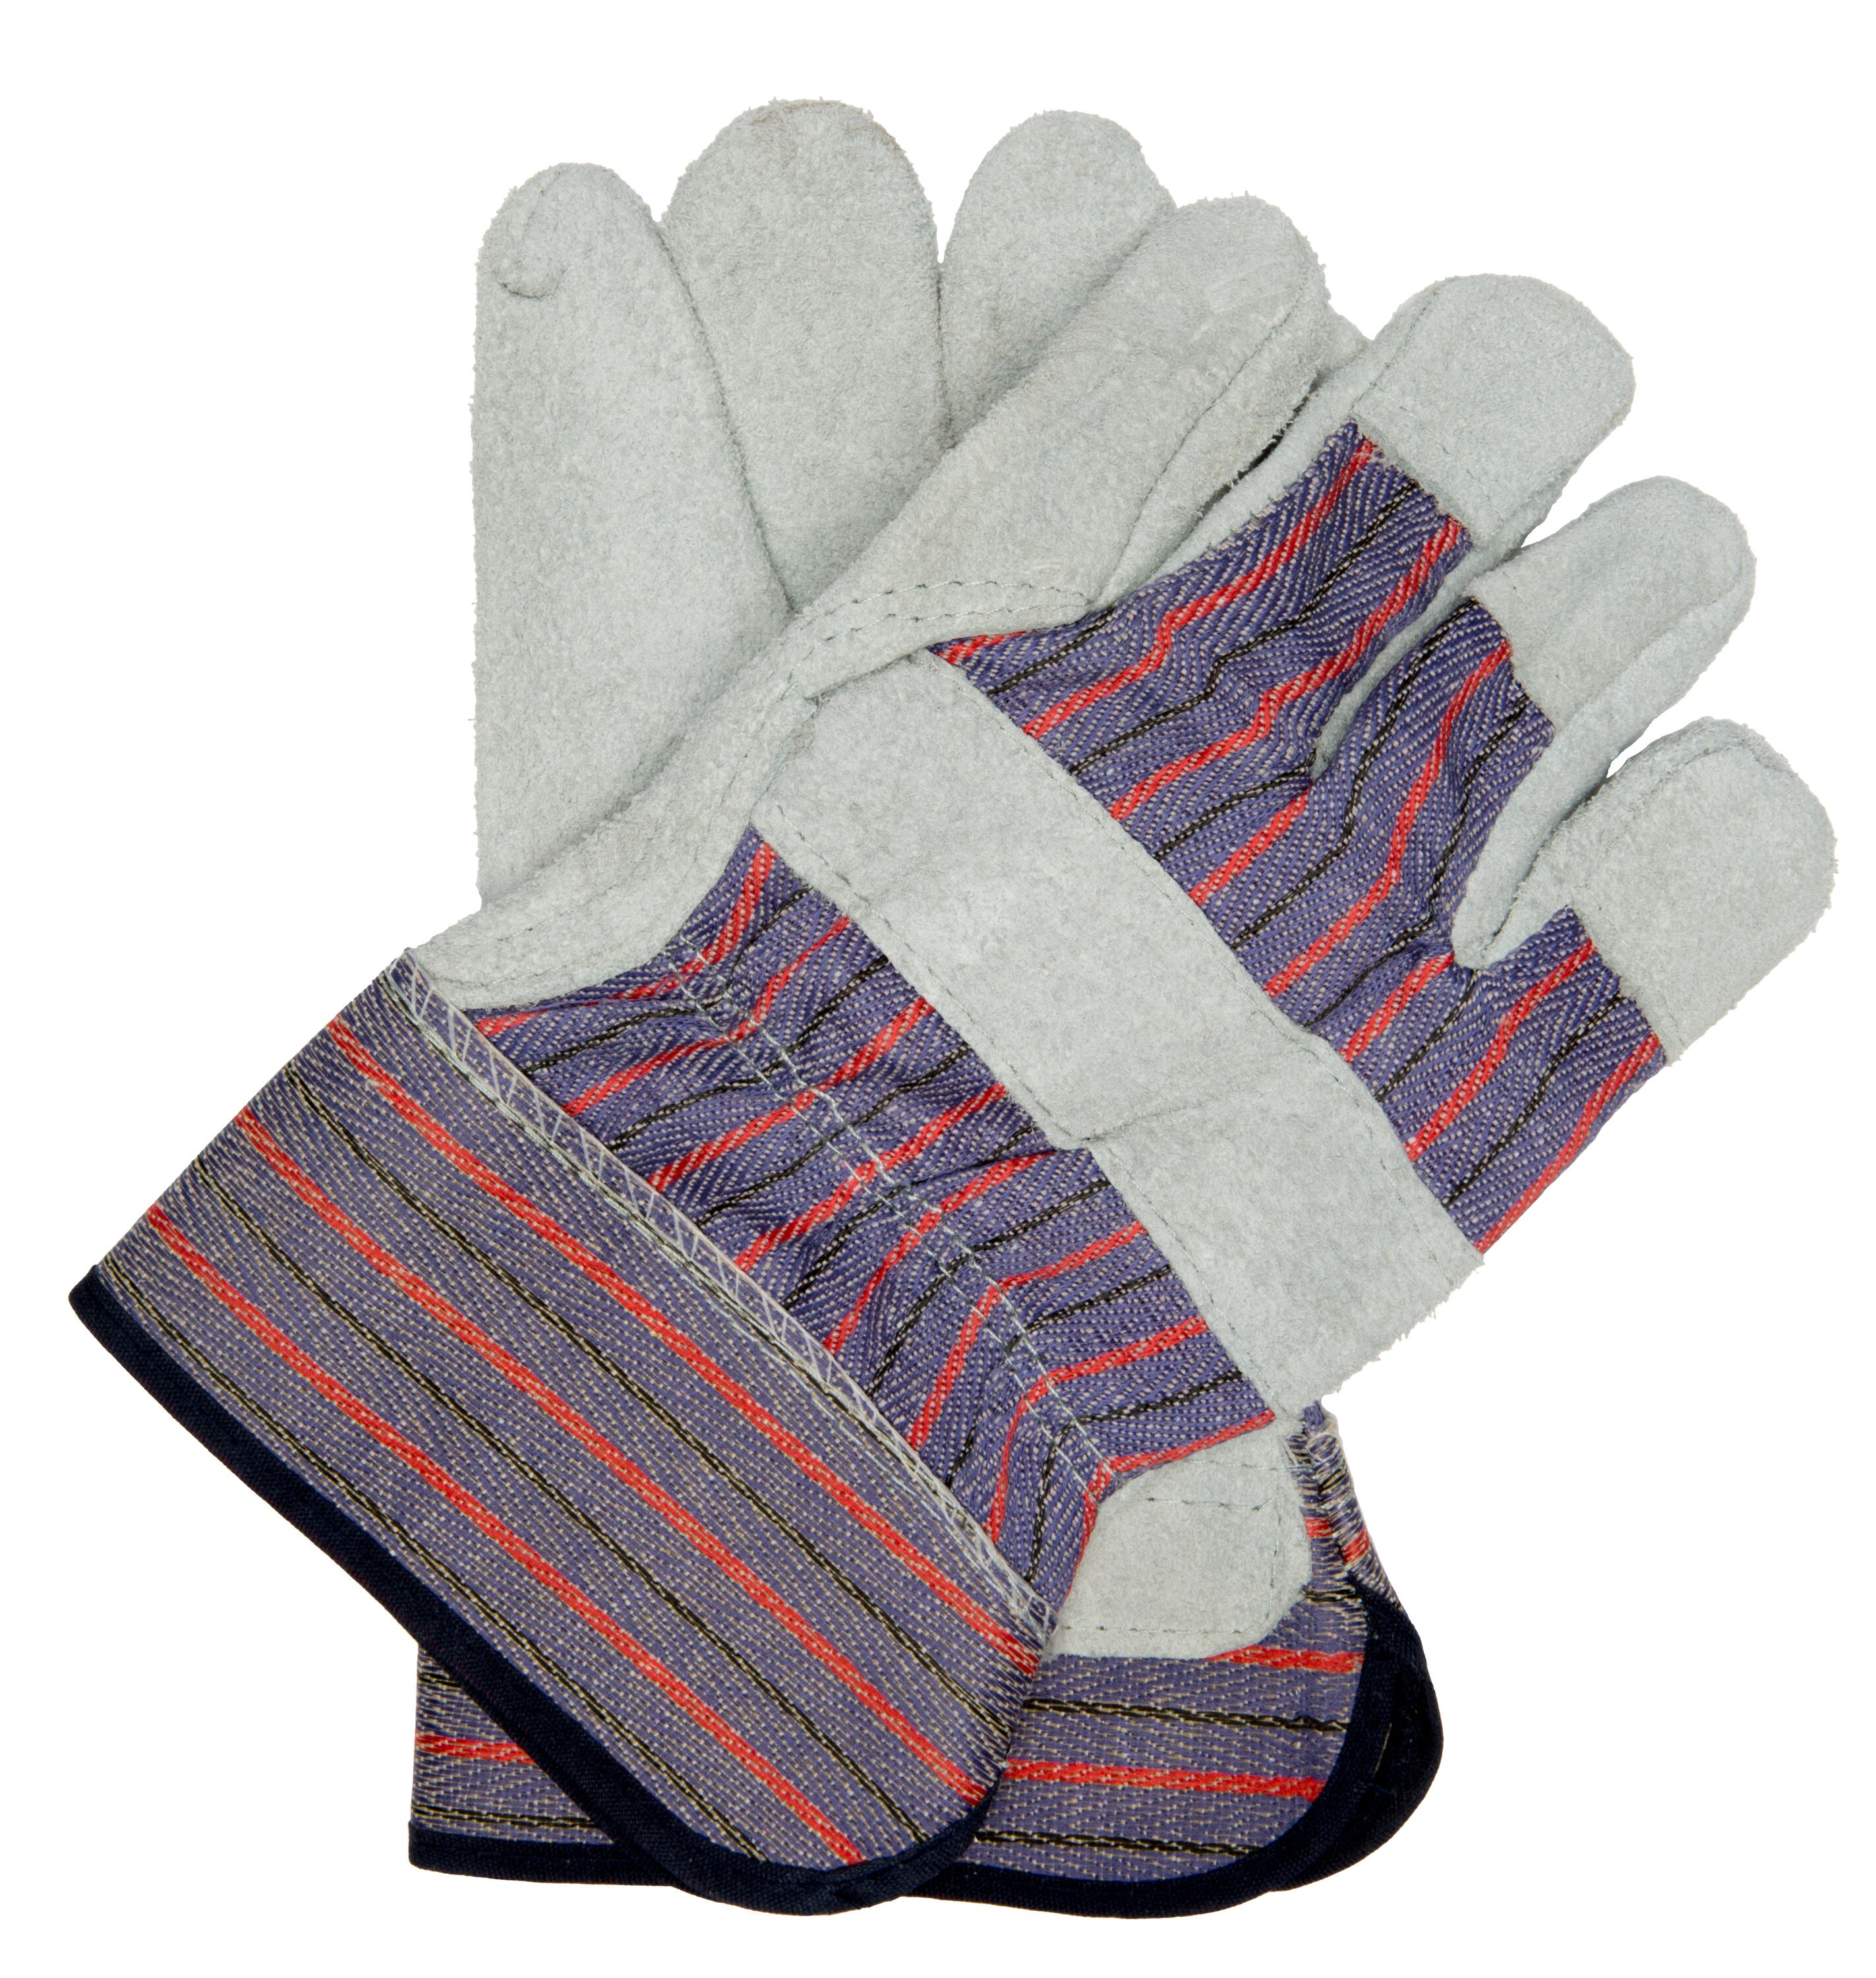 Chrome Leather Palm Size L 12 x Pairs Super Soft Men's Work Gloves 